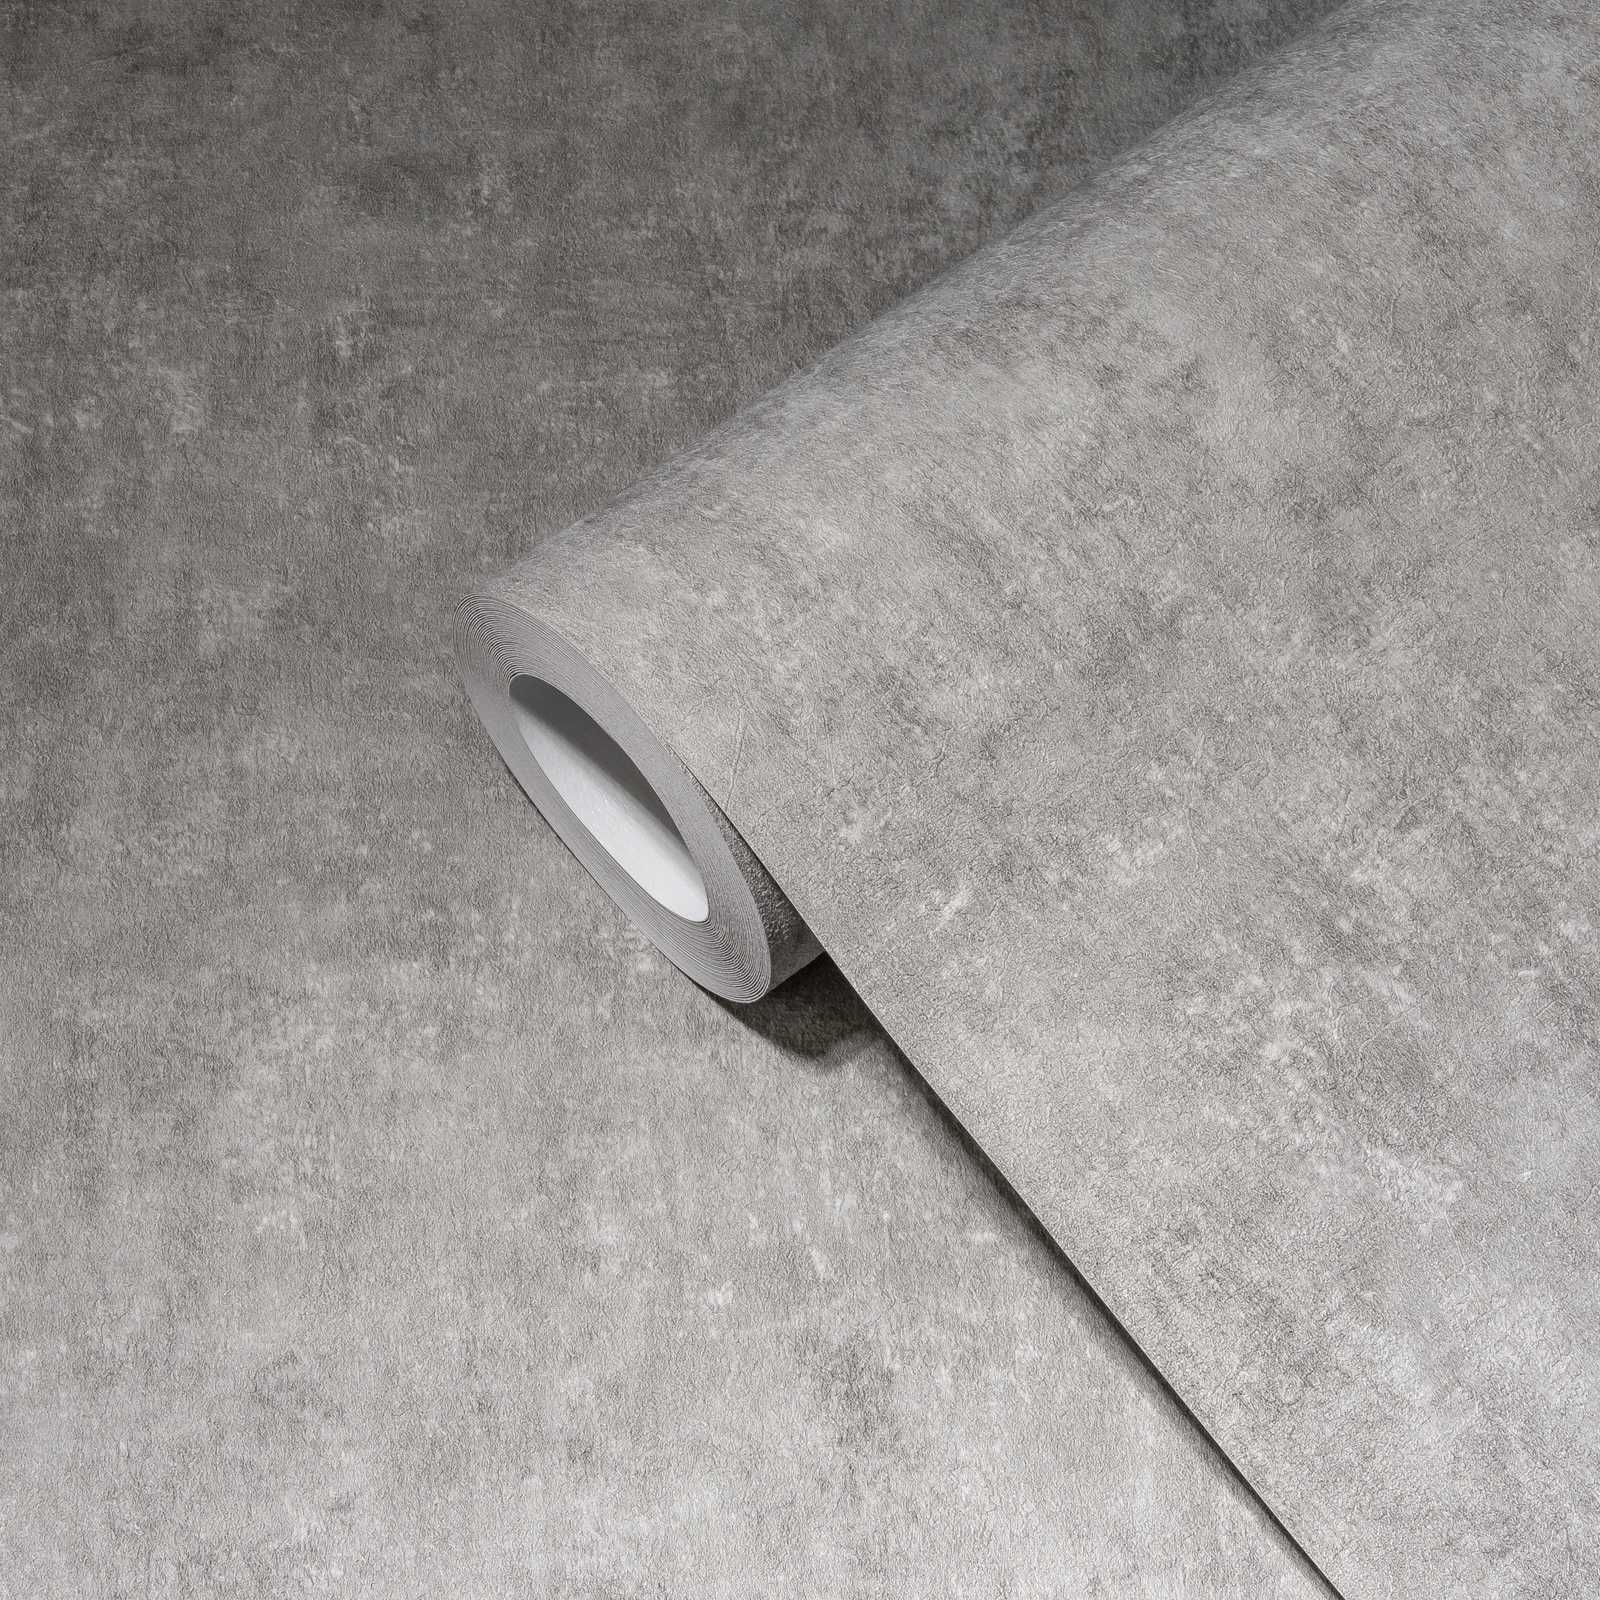             Graue Tapete Putzoptik Design mit Struktureffekt – Grau
        